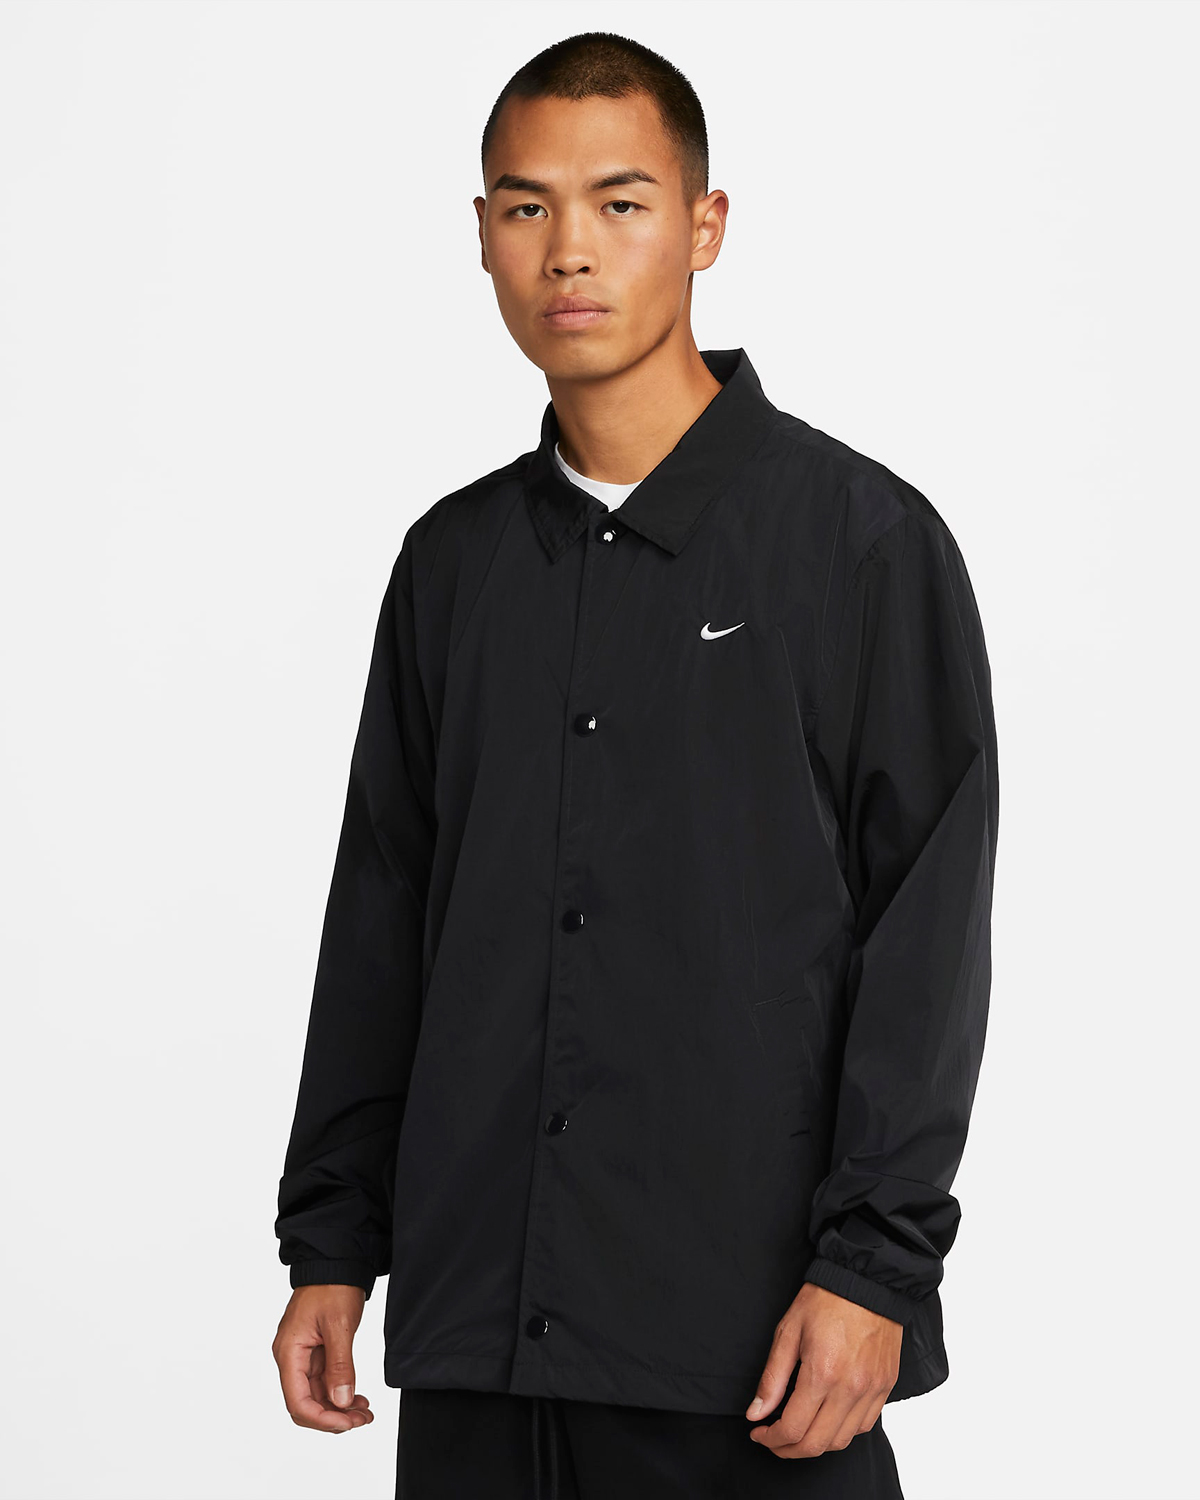 Nike-Sportswear-Coaches-Jacket-Black